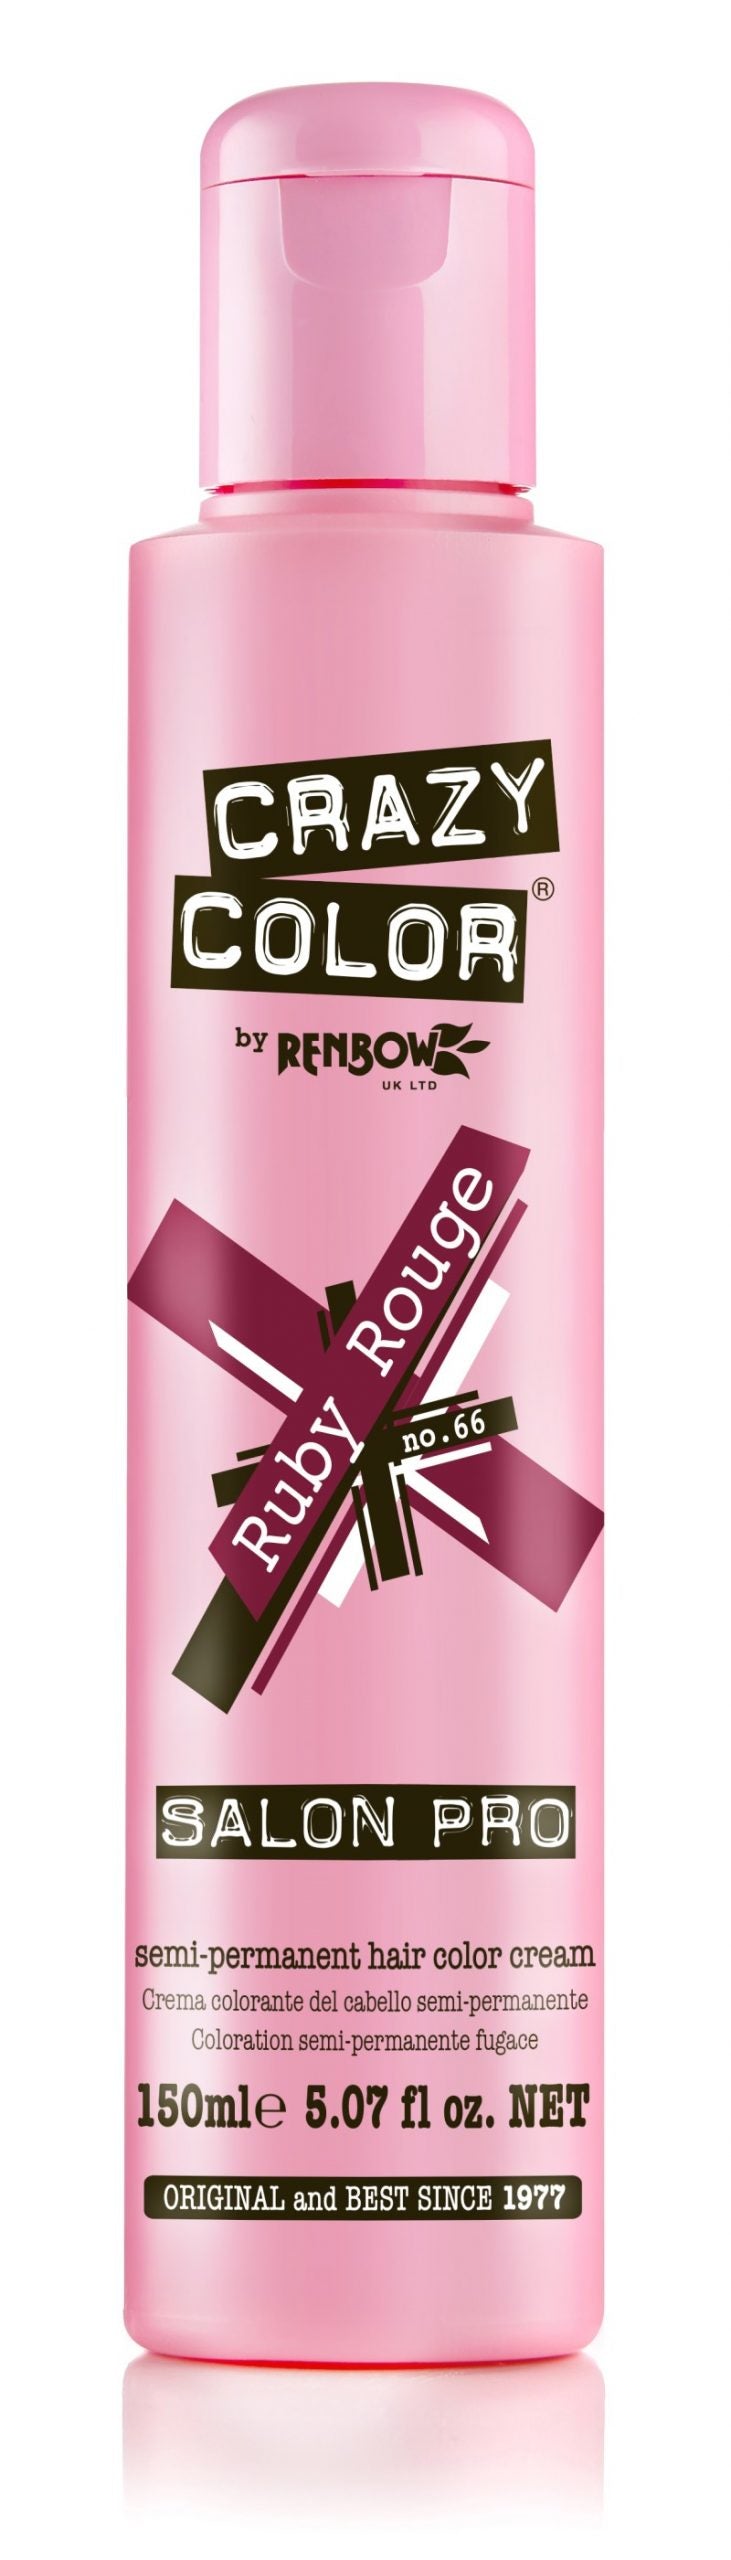 Crazy Color Semi-Permanent Hair Color Cream - Ruby Rouge No. 66 (150ml)